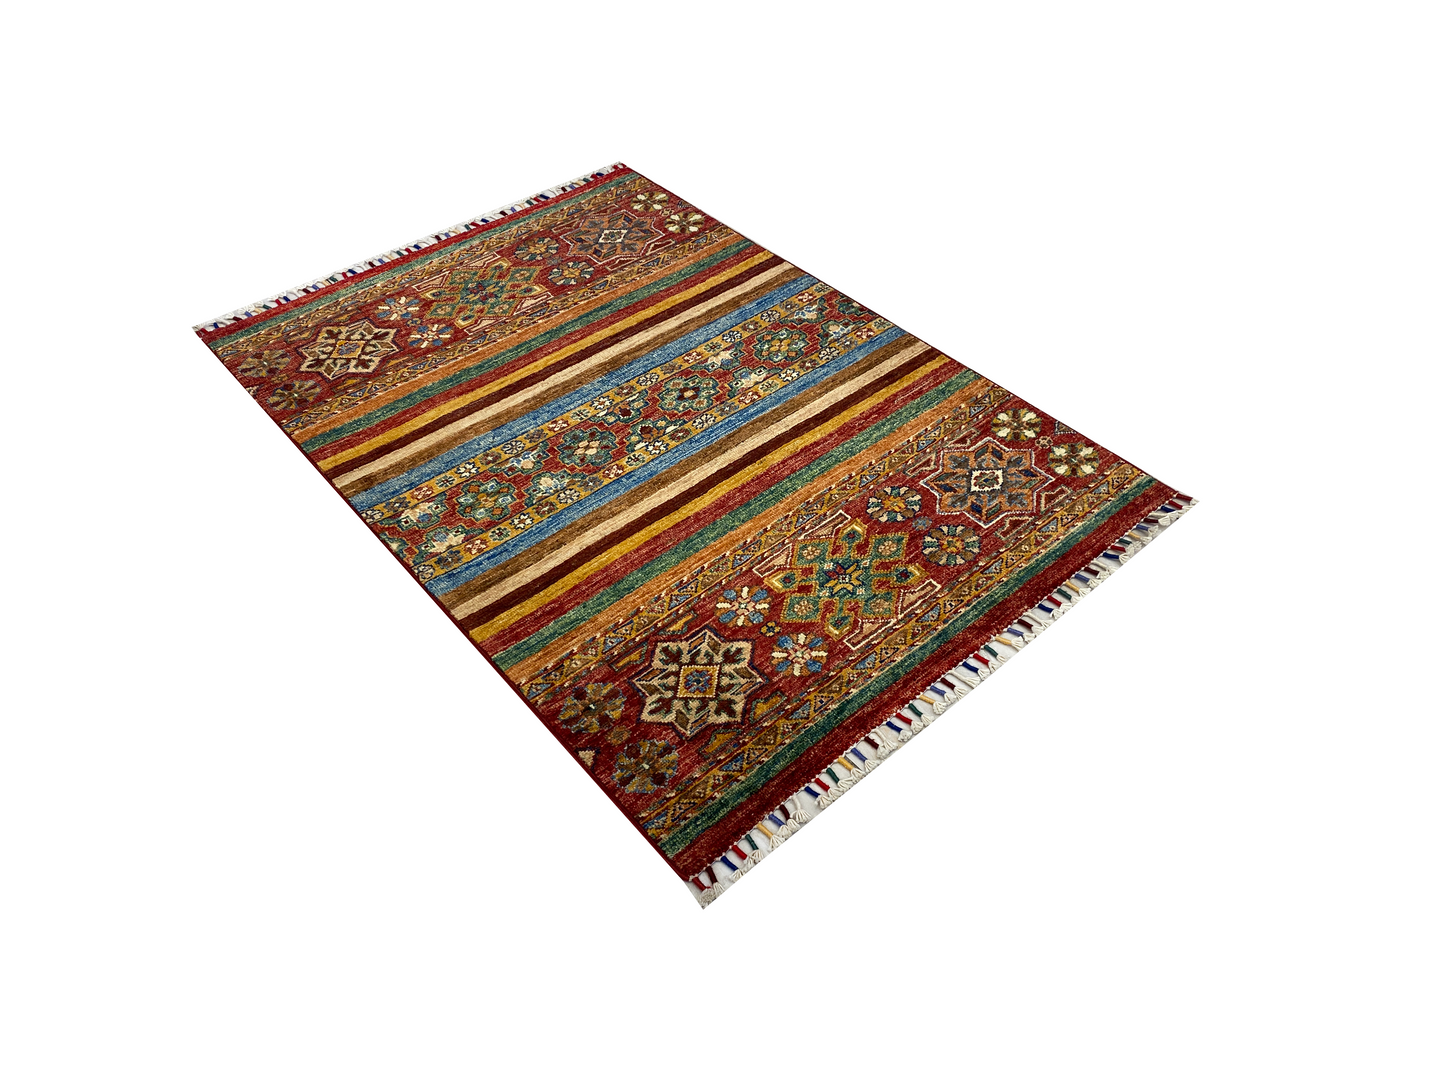 Şirvan Bicolor Carpet 124 x 87 cm